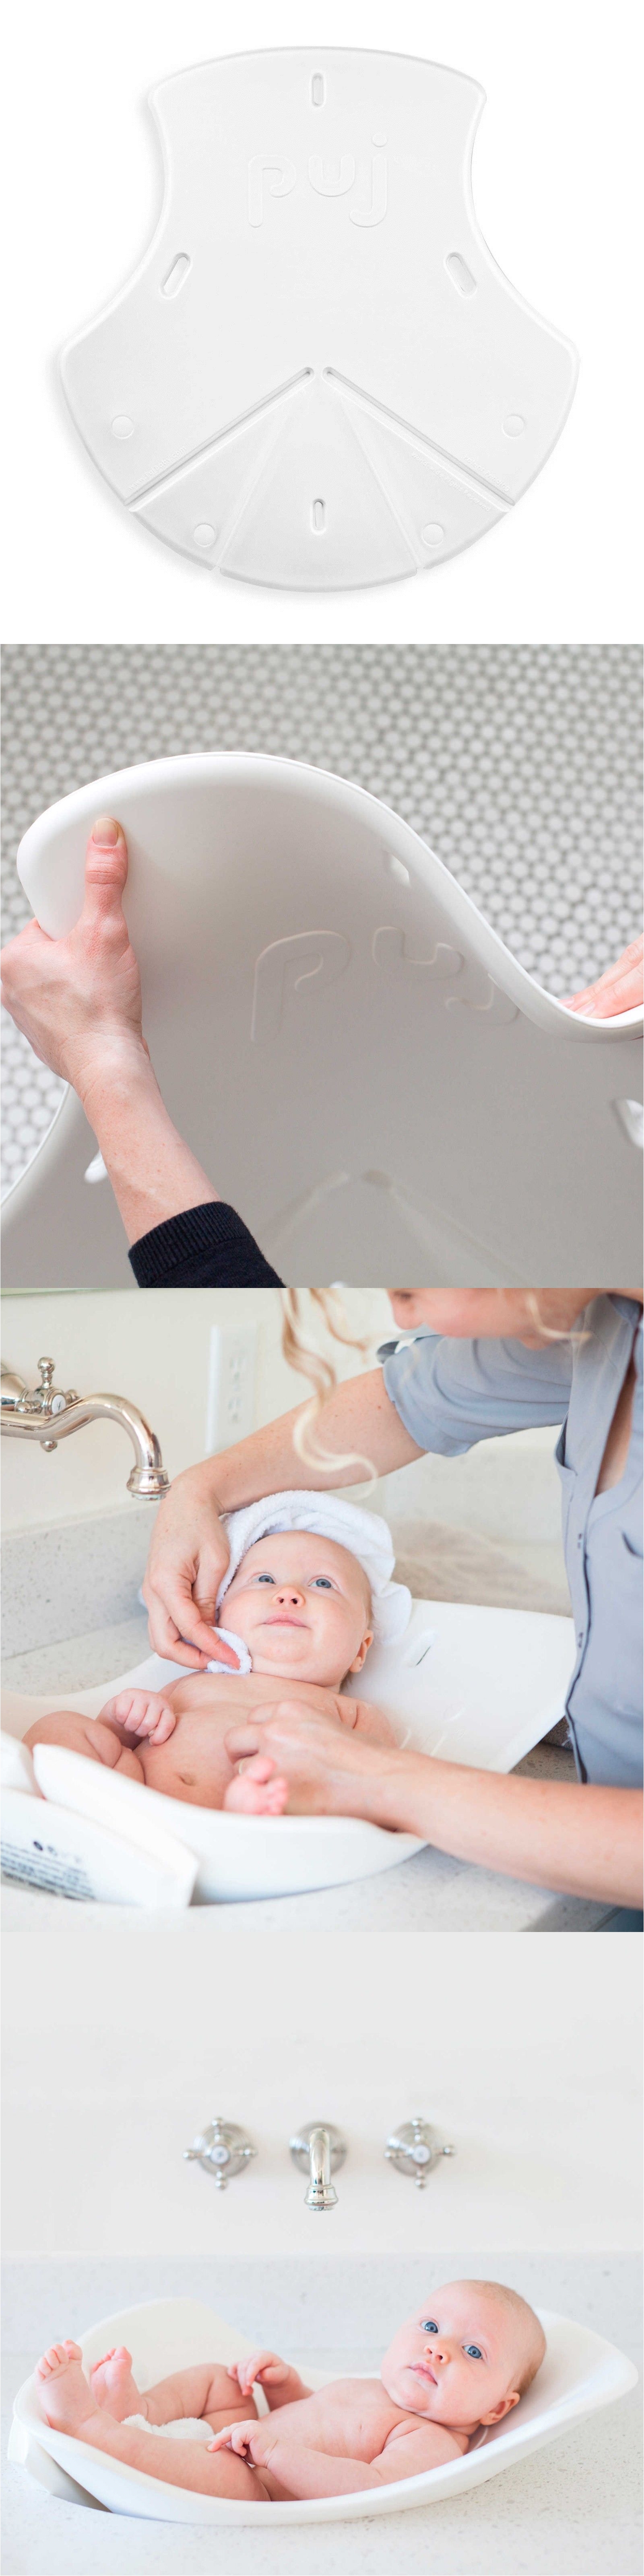 bath tubs 113814 infant bath tub puj tub soft foldable baby bather for bathroom sinks in white buy it now only 39 95 on ebay